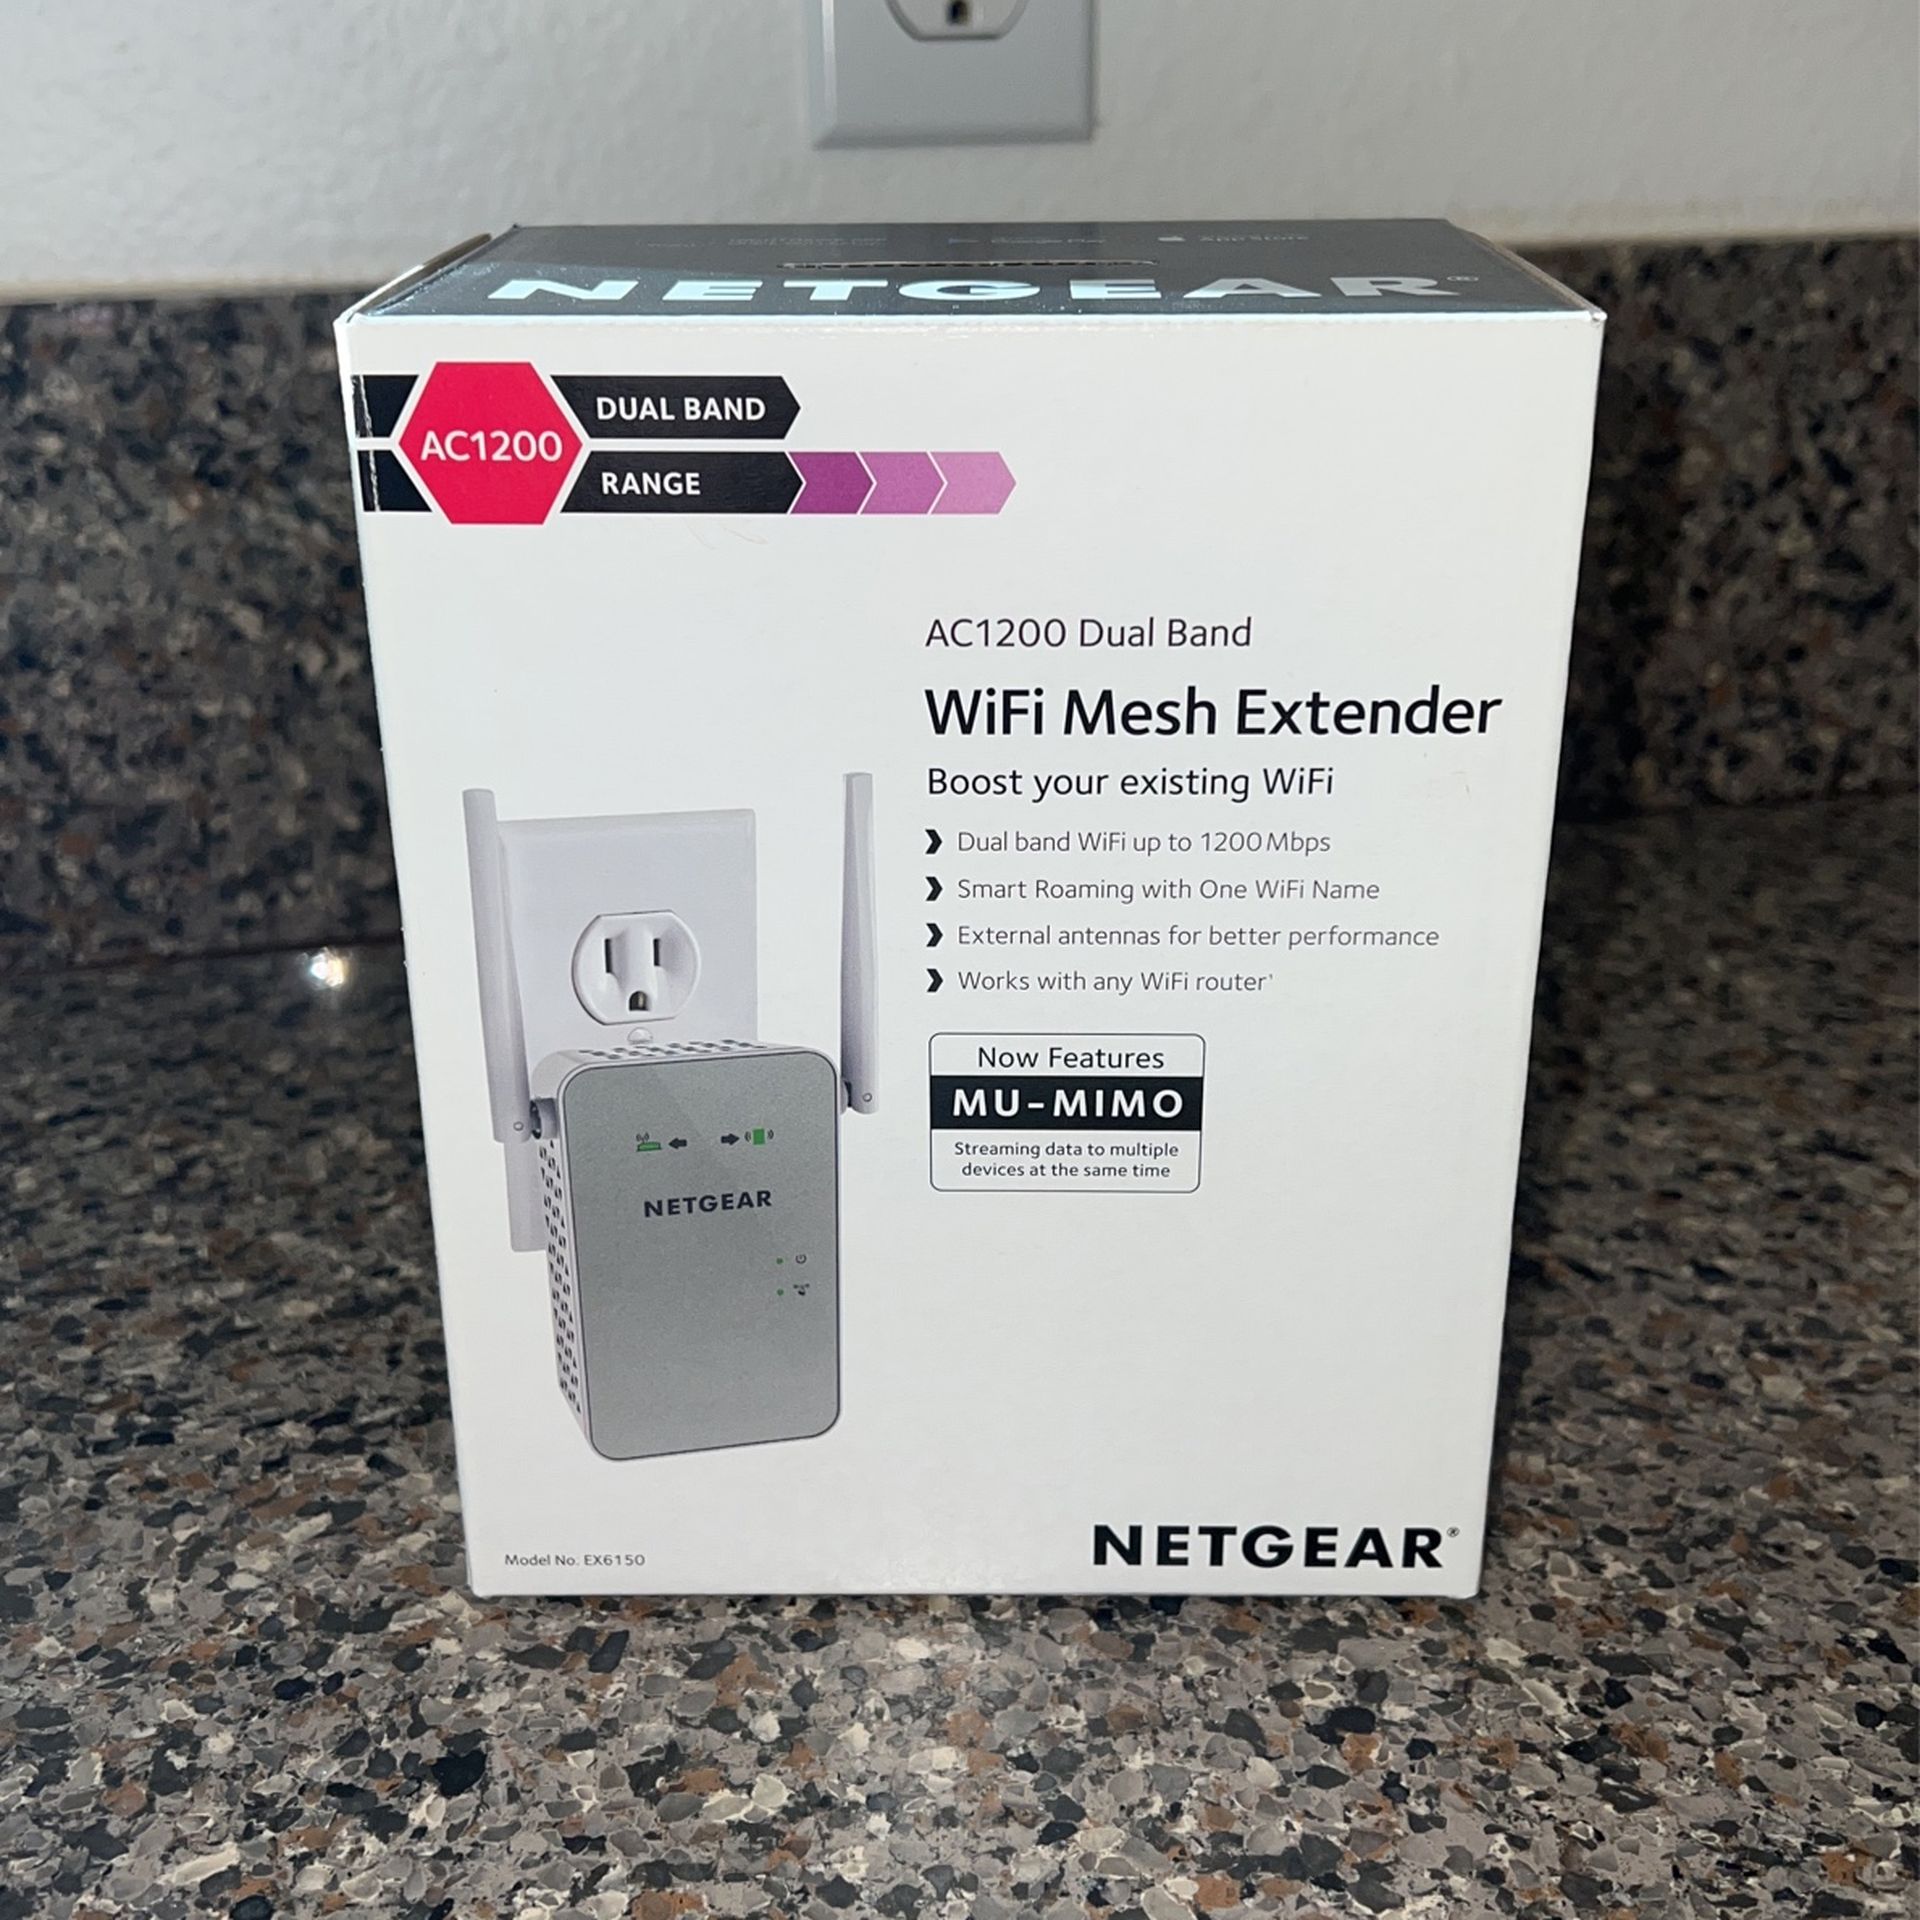 Net gear Ac1200 Dual Band WiFi Mesh Extender